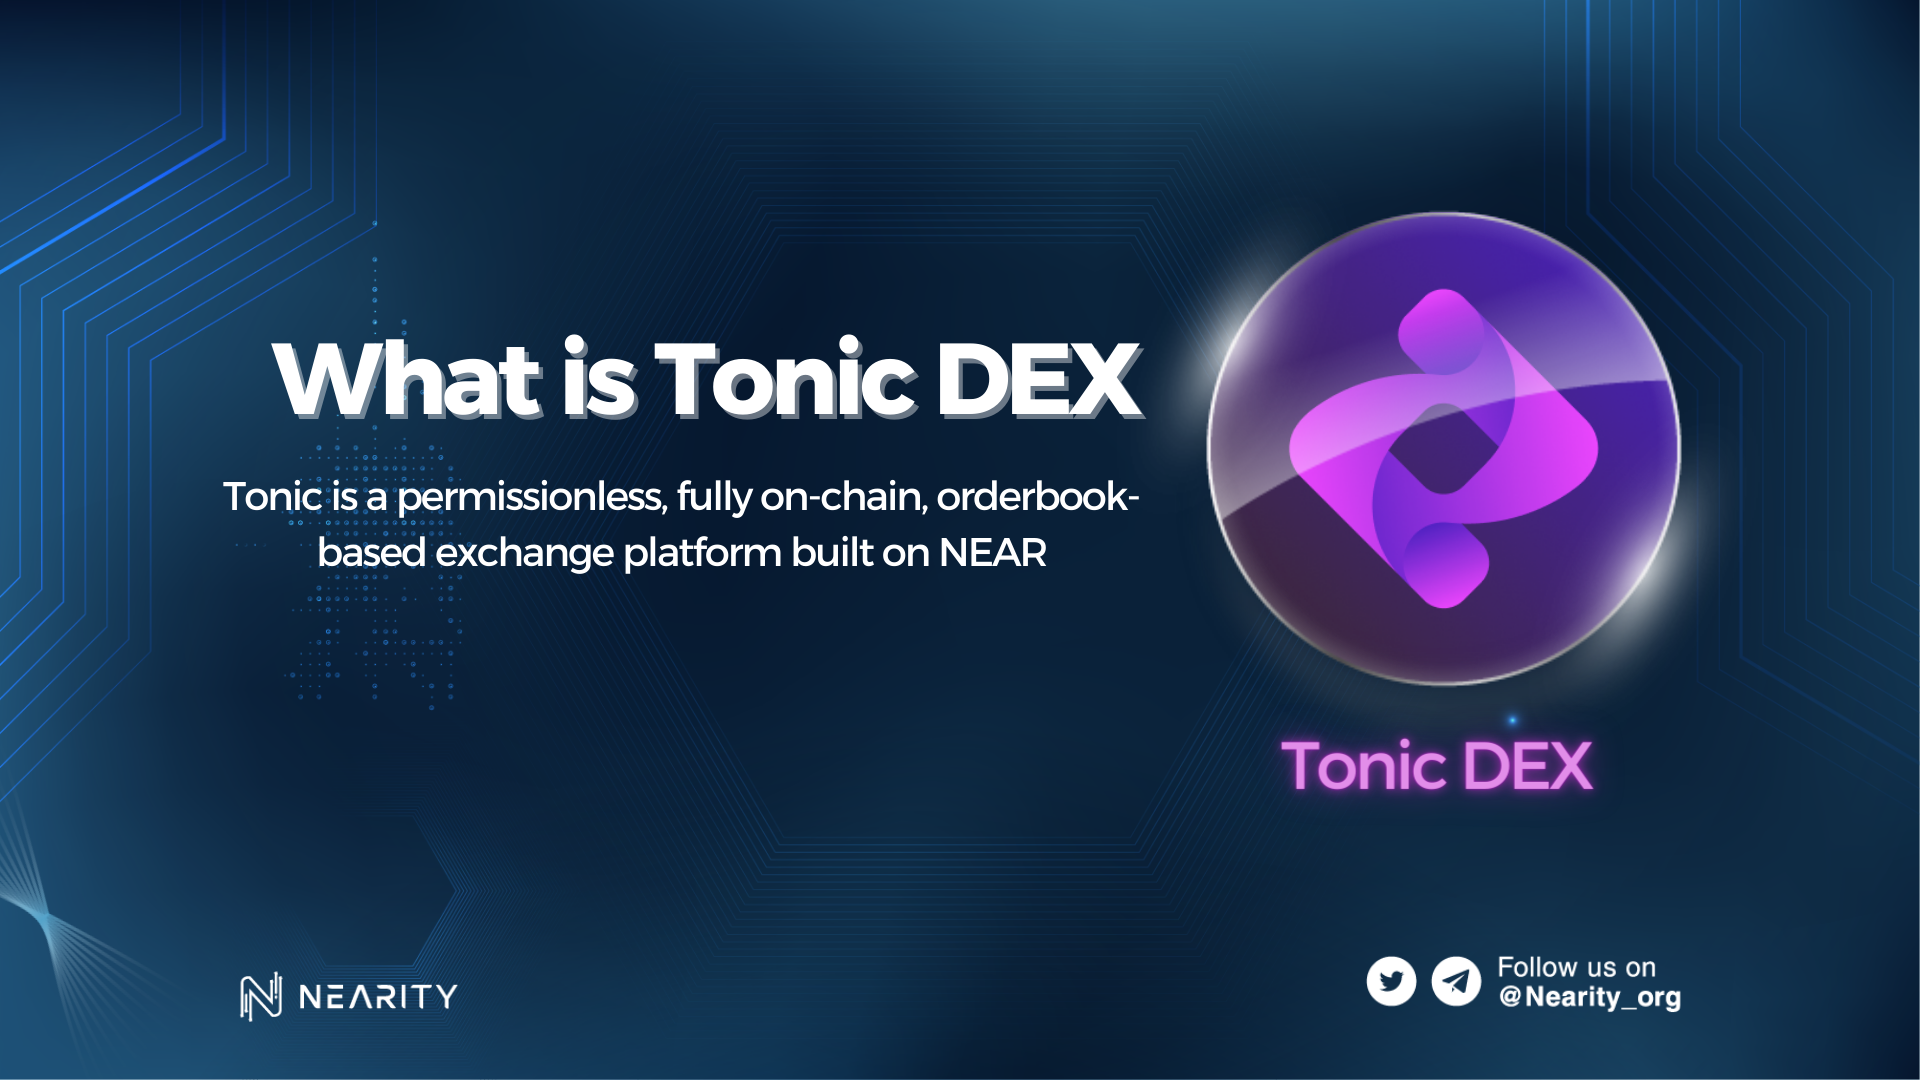 Tonic DEX